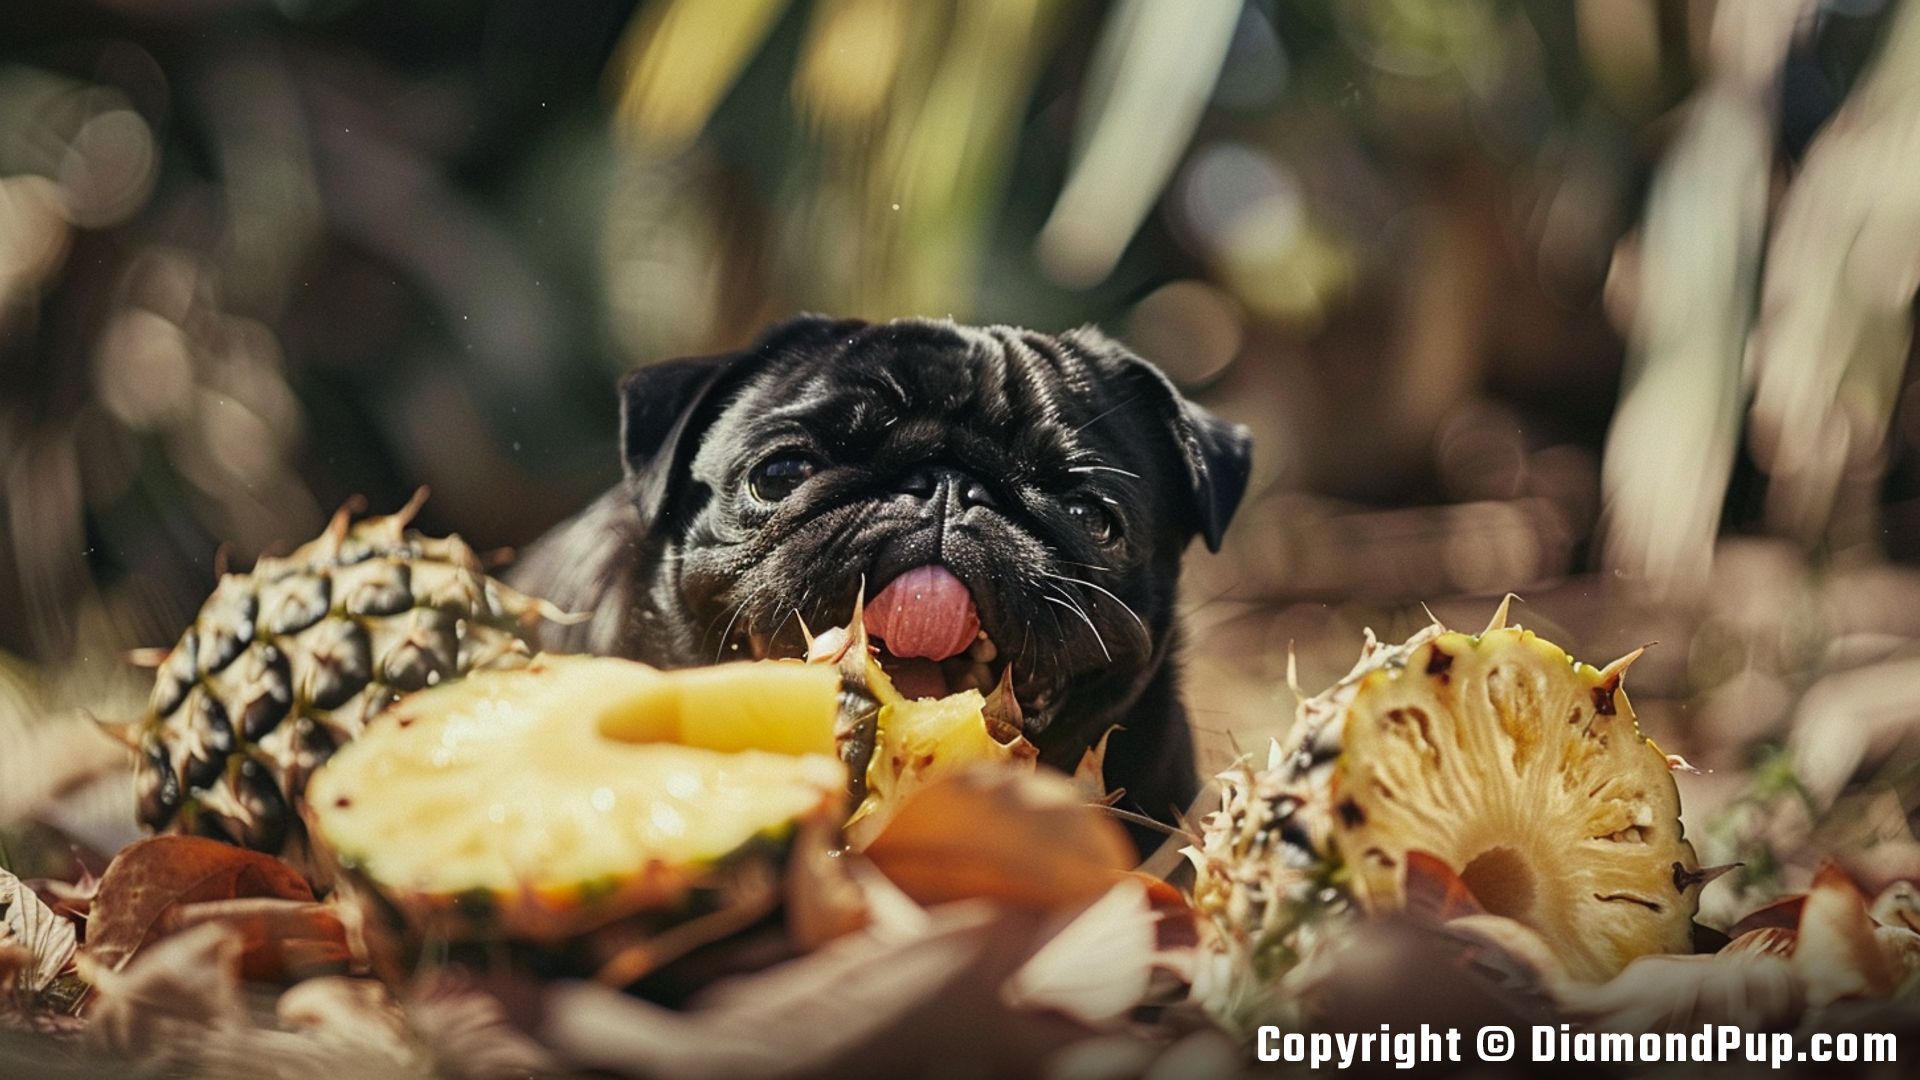 Photograph of an Adorable Pug Snacking on Pineapple